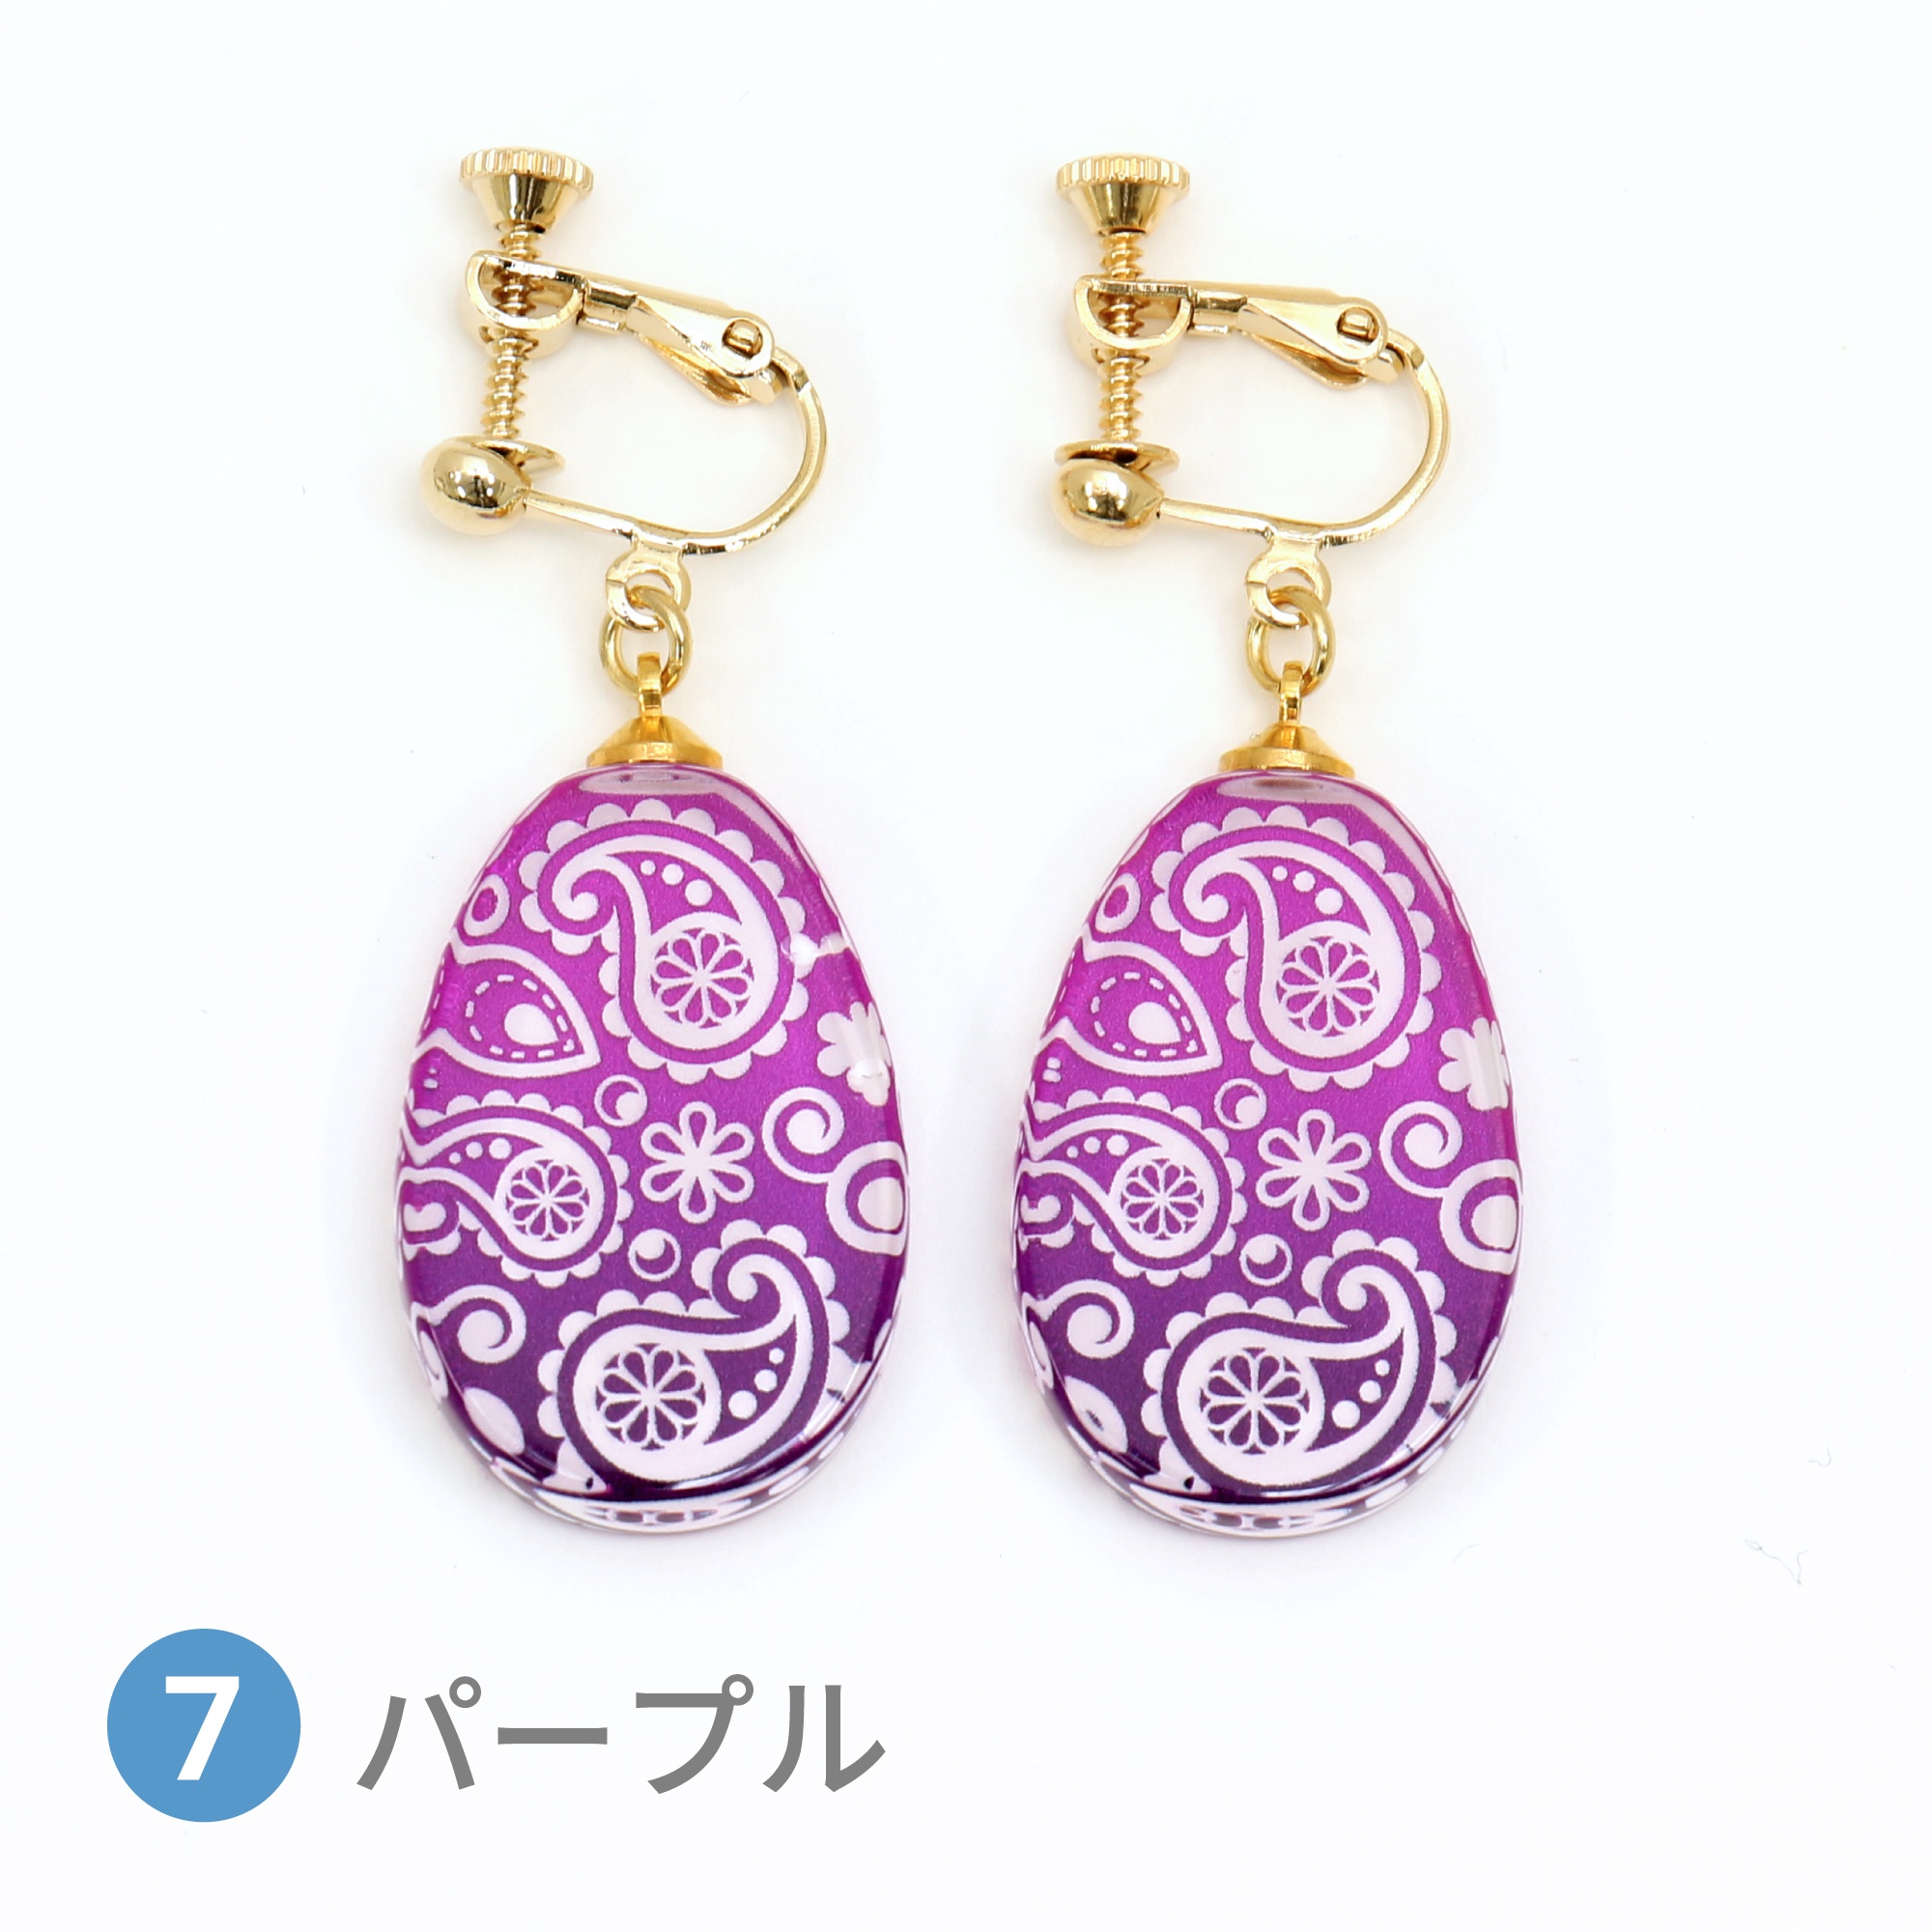 Glass accessories Earring PAISLEY purple drop shape